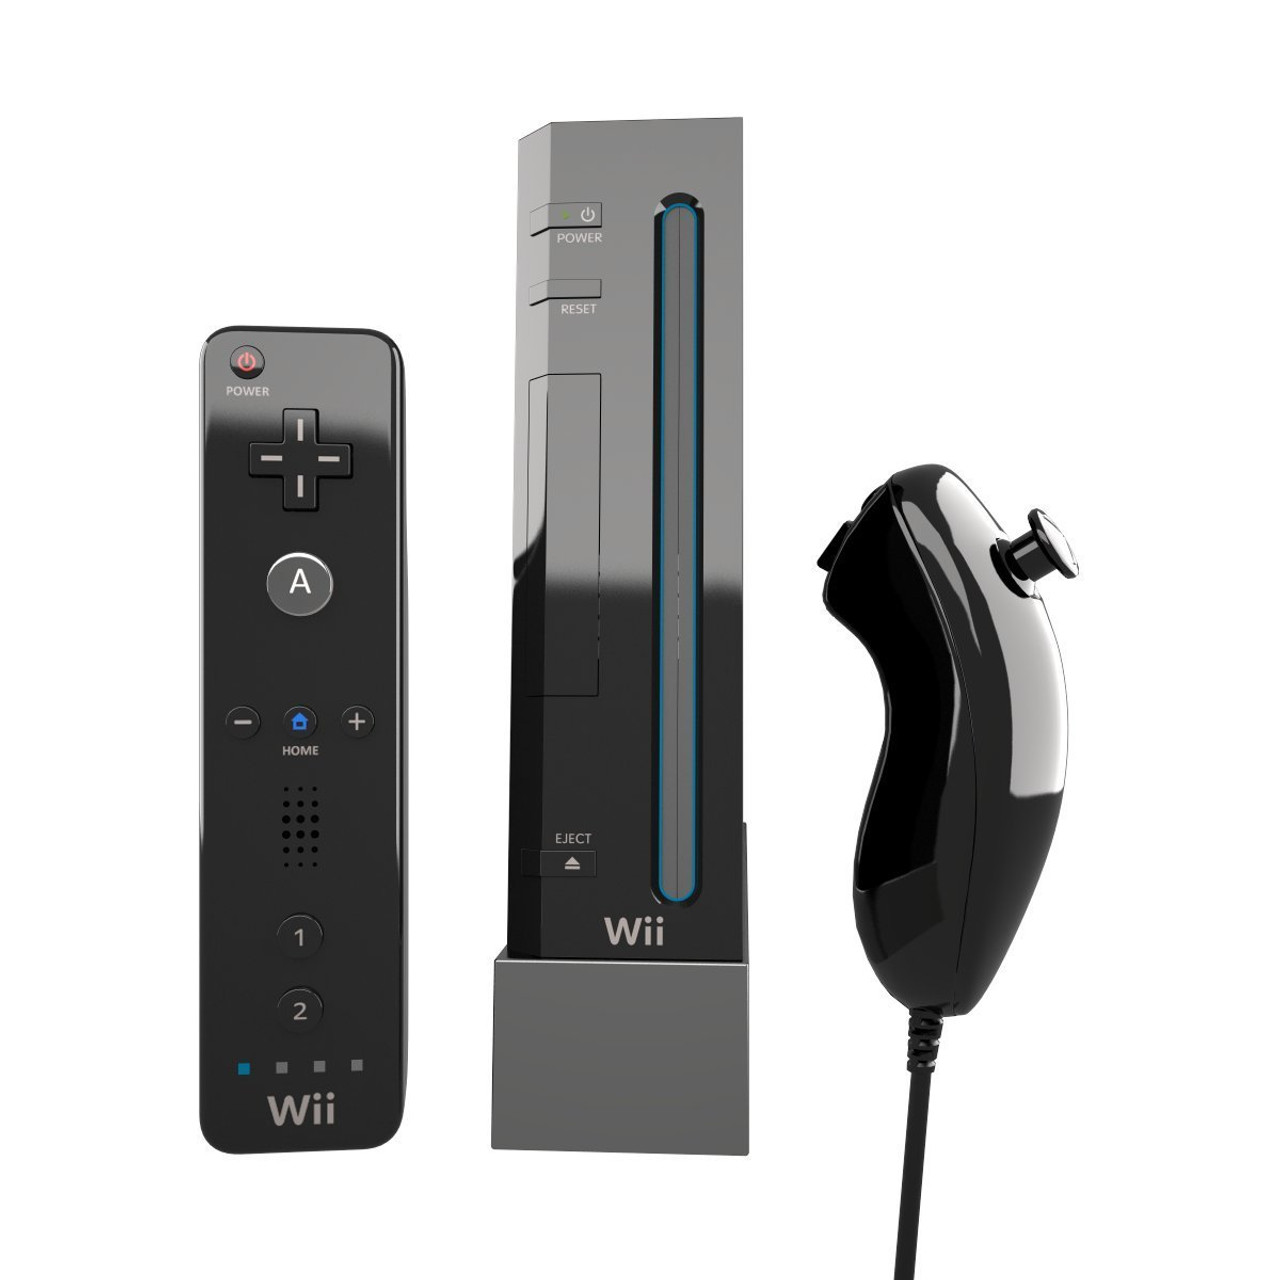 Nintendo Wii System Model Rvl 101 Available At Videogamesnewyork Ny